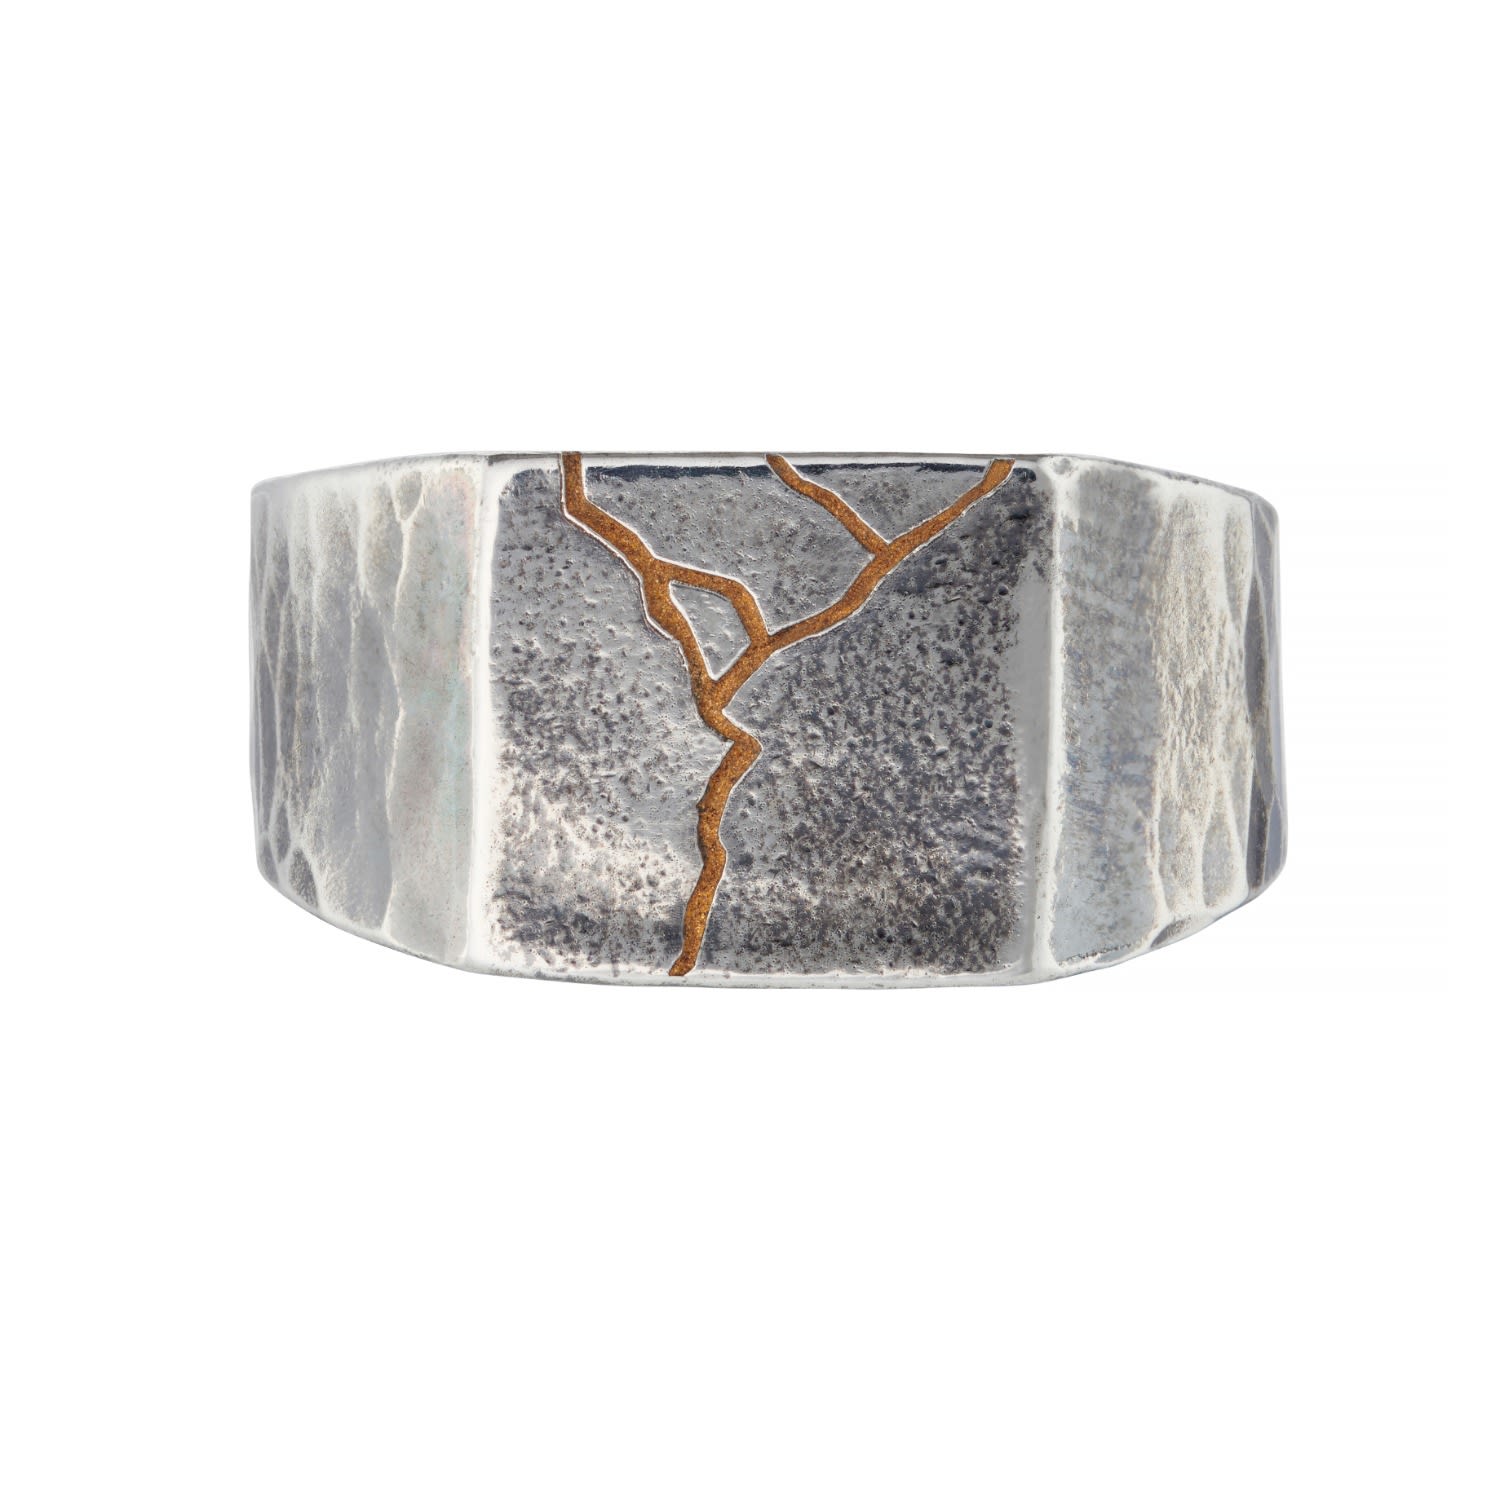 Posh Totty Designs Men's Silver Chunky Oxidised Kintsugi Signet Ring